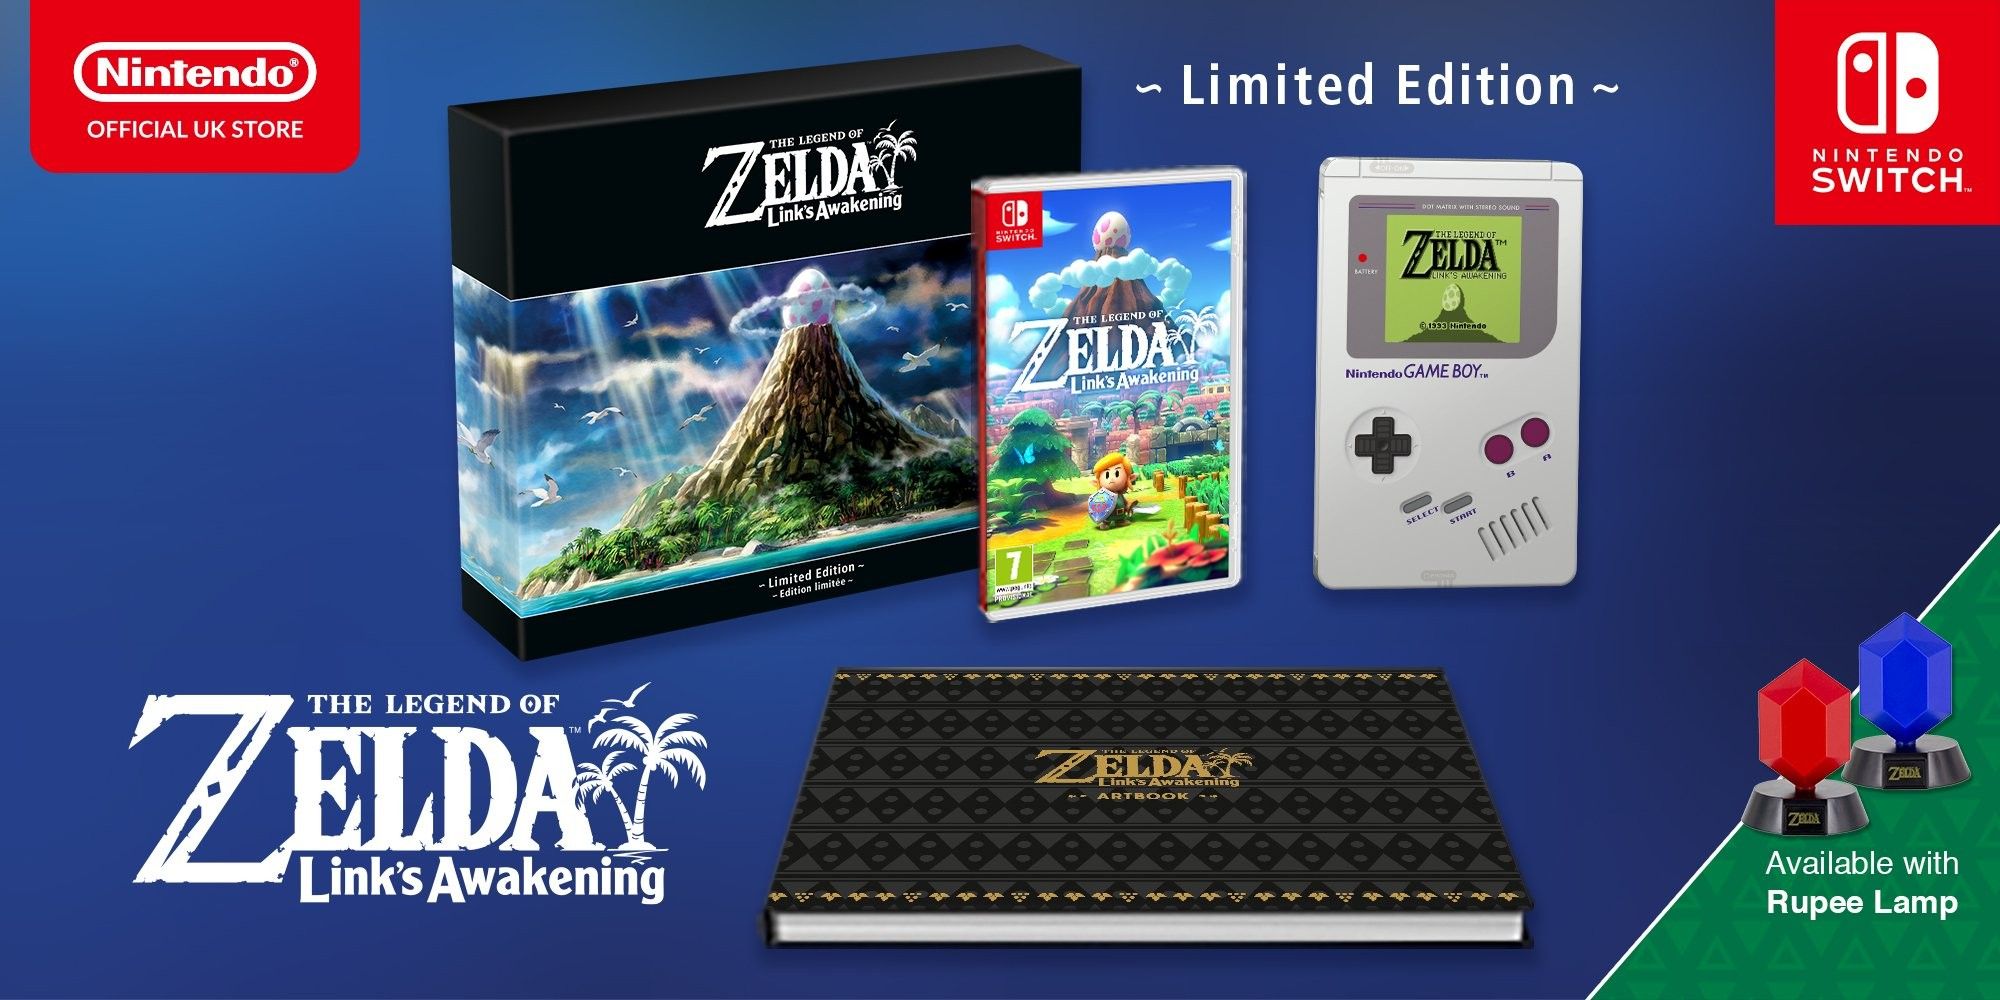 Nintendo link. Nintendo Switch the Legend of Zelda Limited Edition. Zelda link's Awakening Nintendo Switch коллекционное издание. The Legend of Zelda 2 коллекционное издание. Линк Зельда Нинтендо.